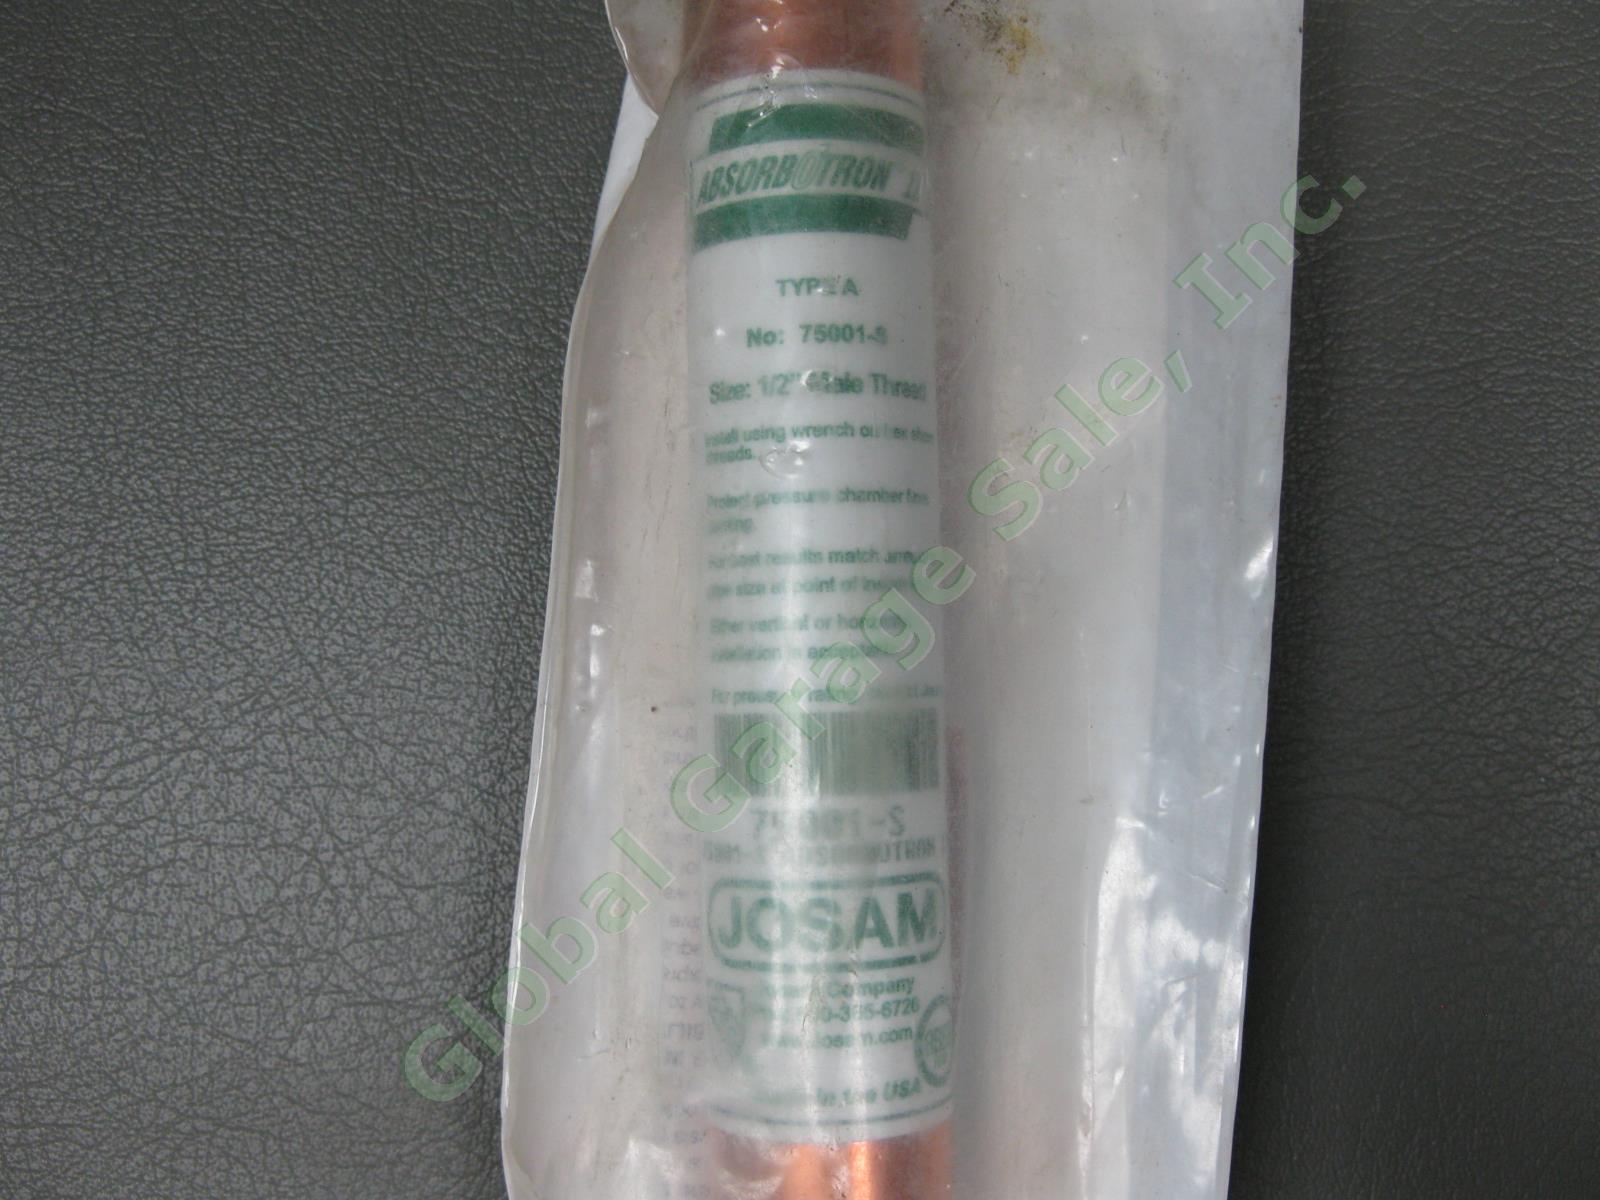 2 Absorbotron II Type-A 1/2" Male Copper Water Hammer Arrester Set Josam 75001-S 1